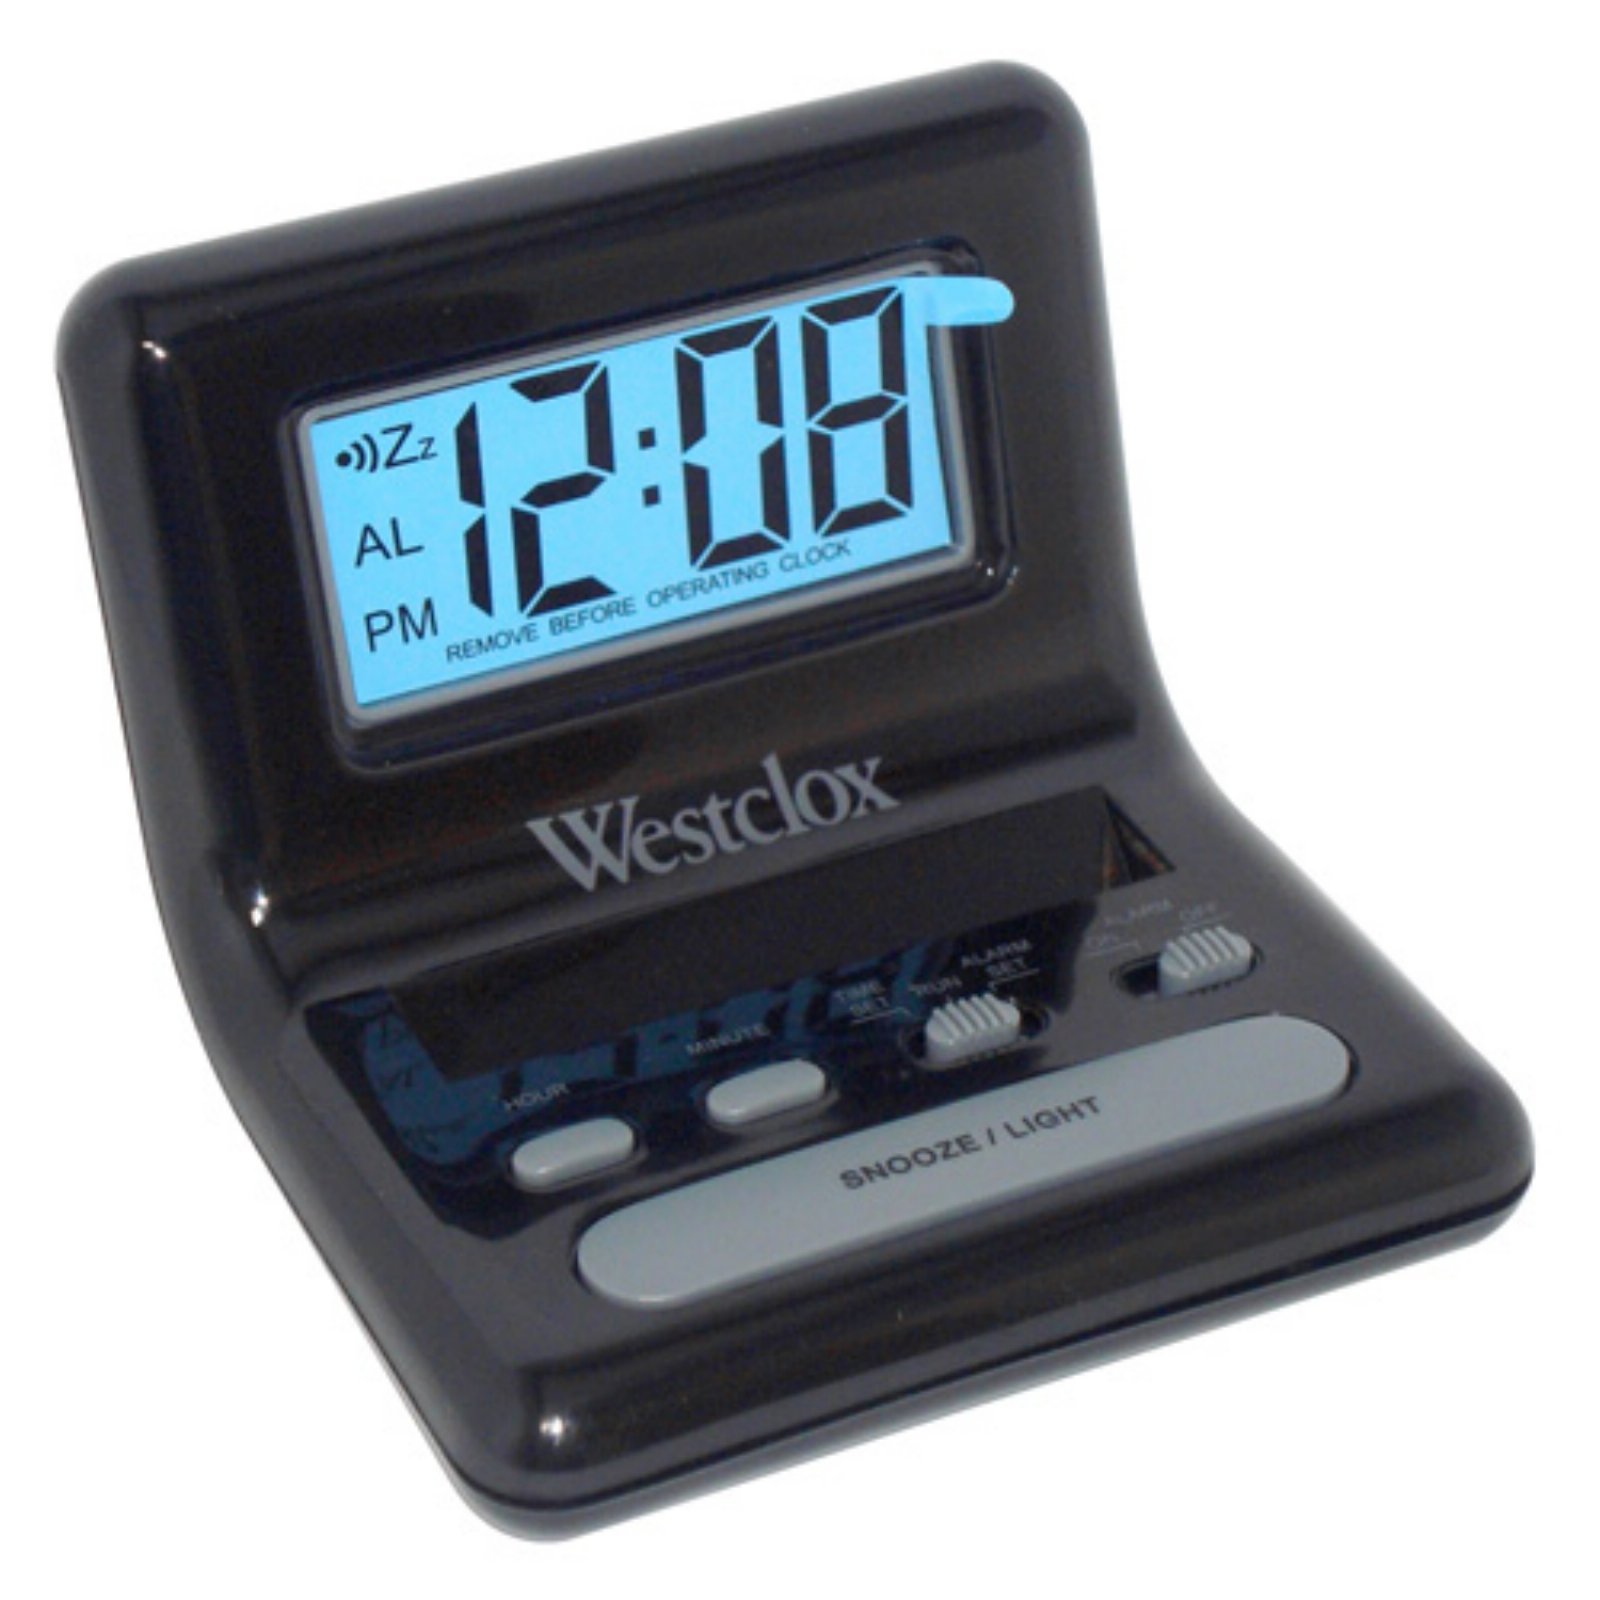 Westclox Blue LCD Alarm Clock, 47539A - image 2 of 4